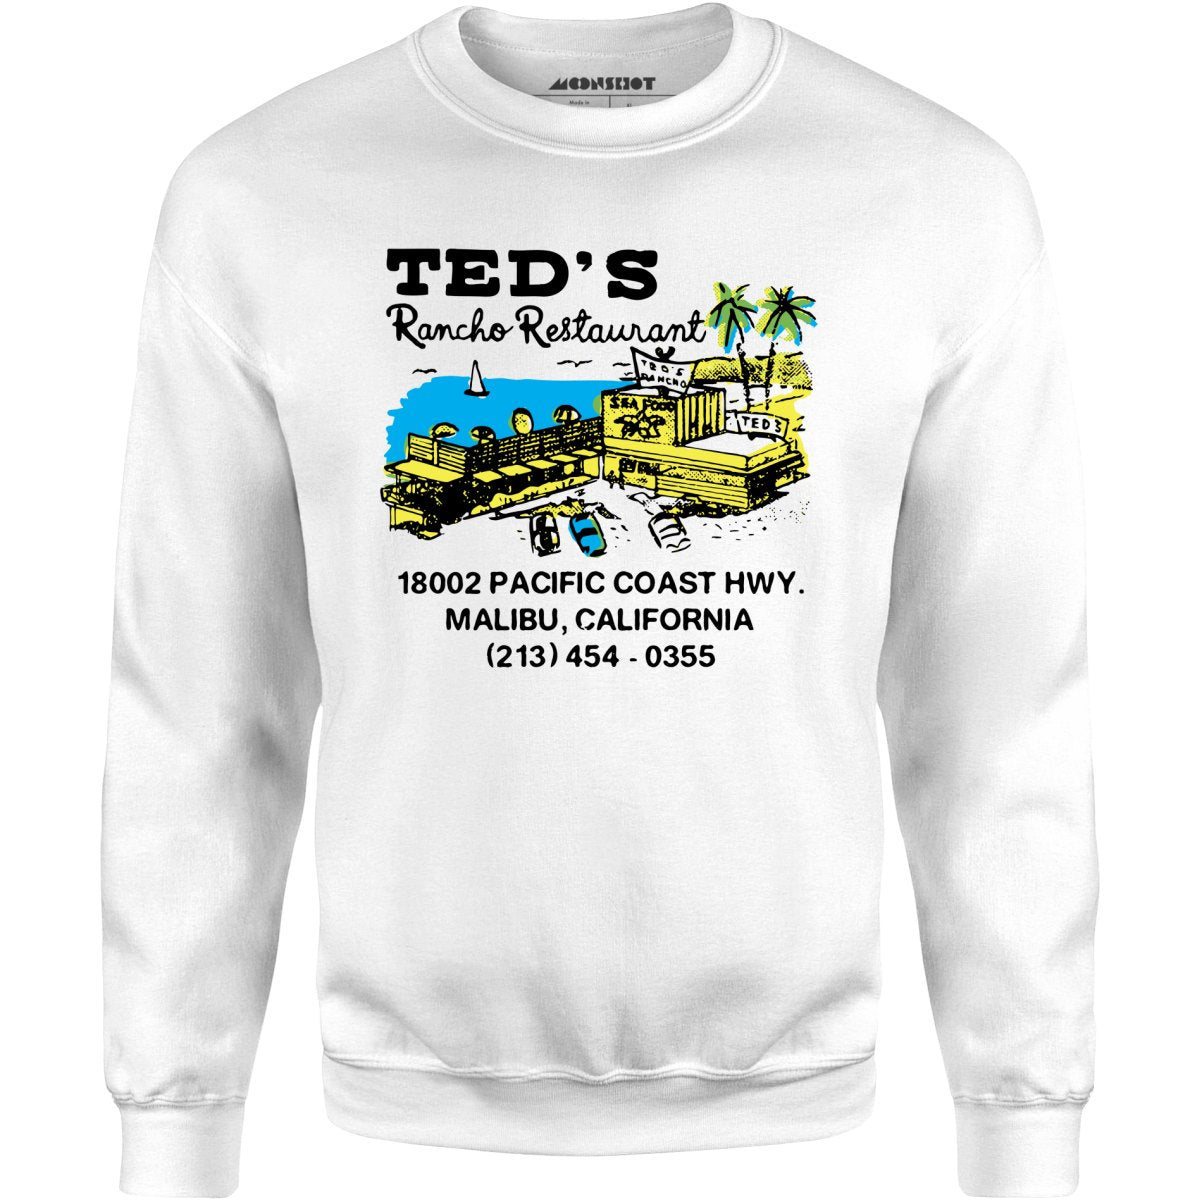 Ted's Rancho Restaurant - Malibu, CA - Vintage Restaurant - Unisex Sweatshirt